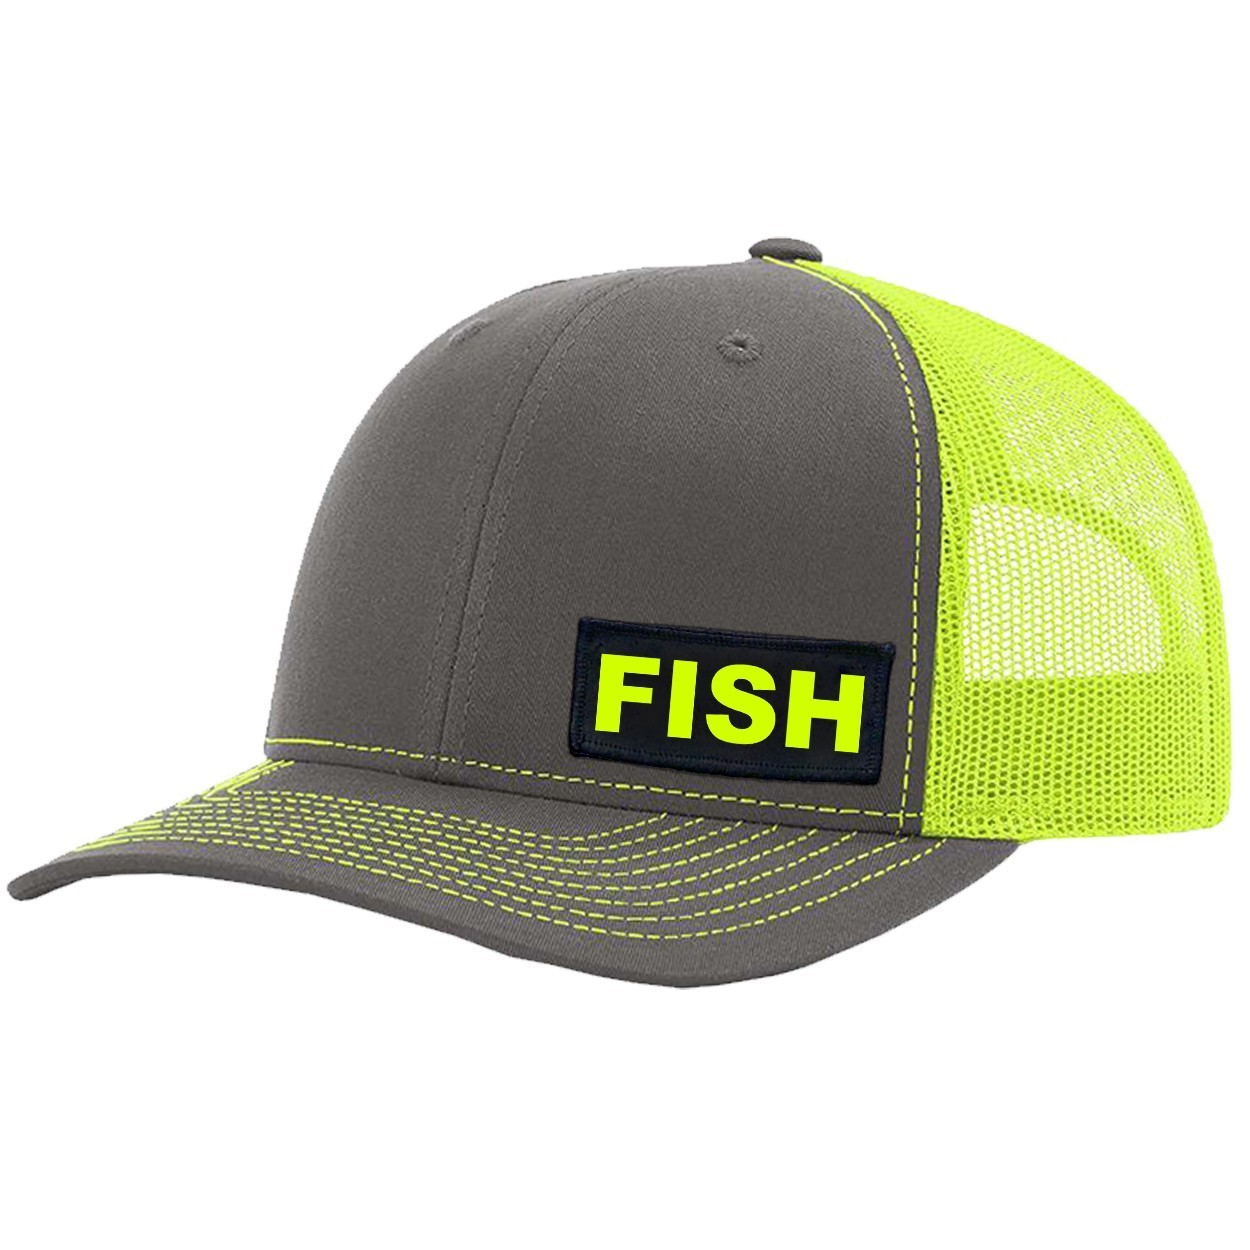 Fish Brand Logo Night Out Woven Patch Snapback Trucker Hat Gray/Neon Yellow (Hi-Vis Logo)